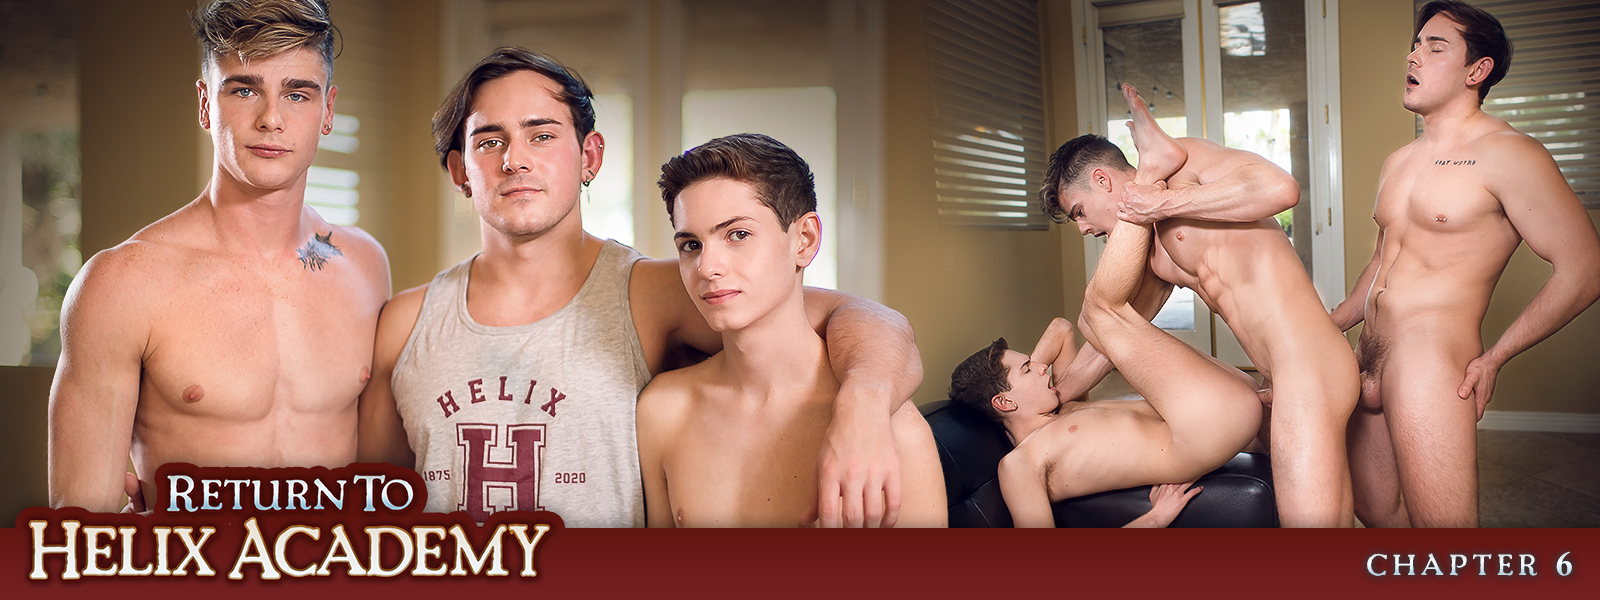 Gay hung twinks Josh Brady, Travis Stevens & Riley Finch wildly doing threesome